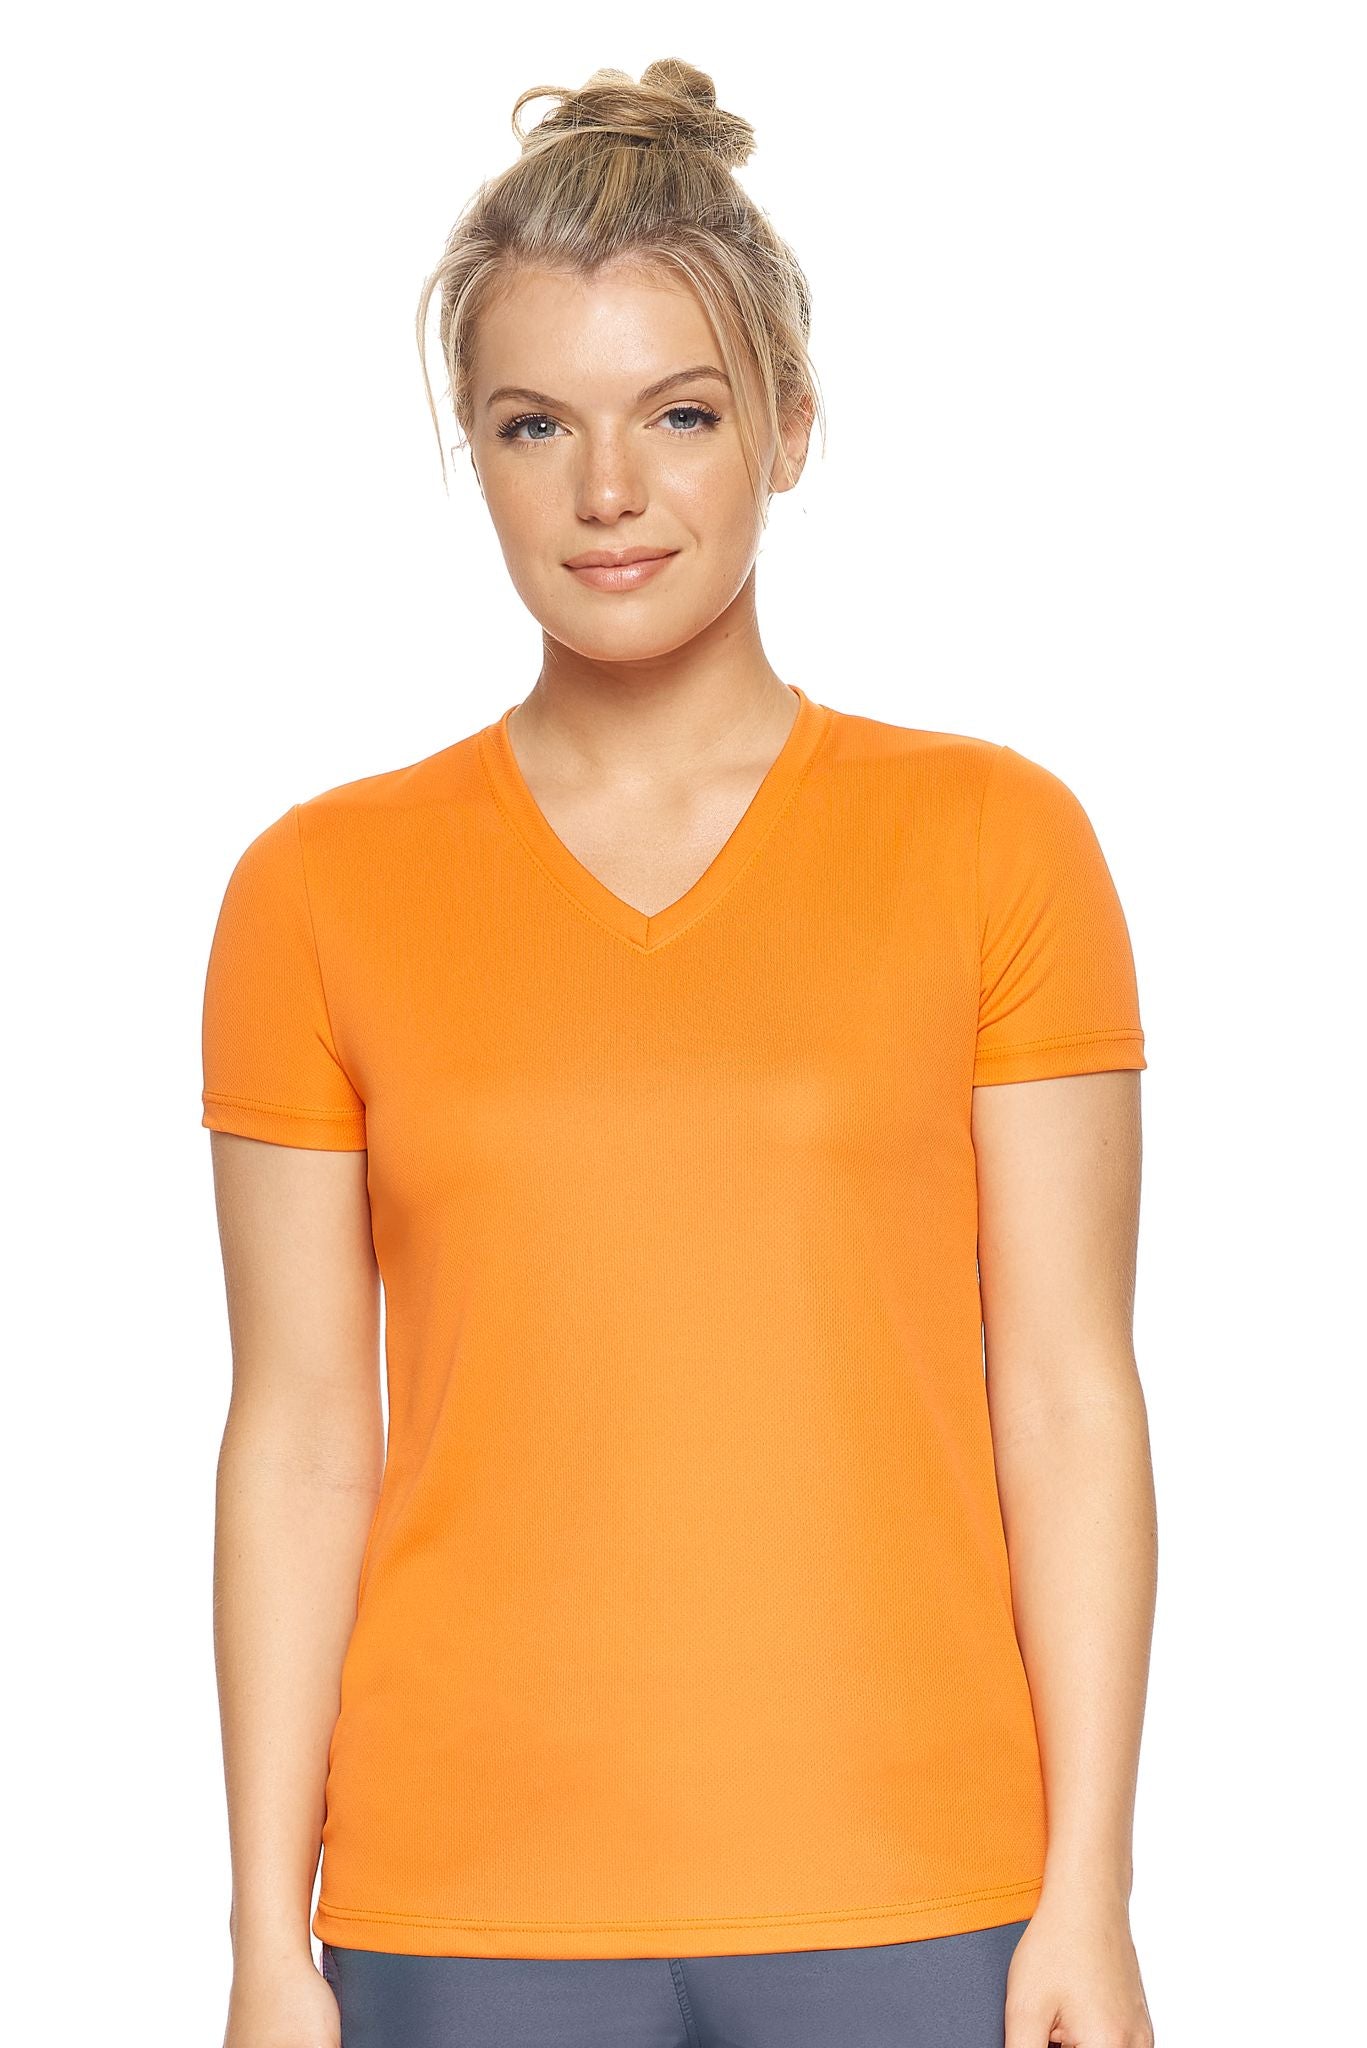 Expert Brand Retail Made in USA Sportswear Activewear Women's Short Sleeve V-neck Tec Tee Oxymesh orange#color_orange